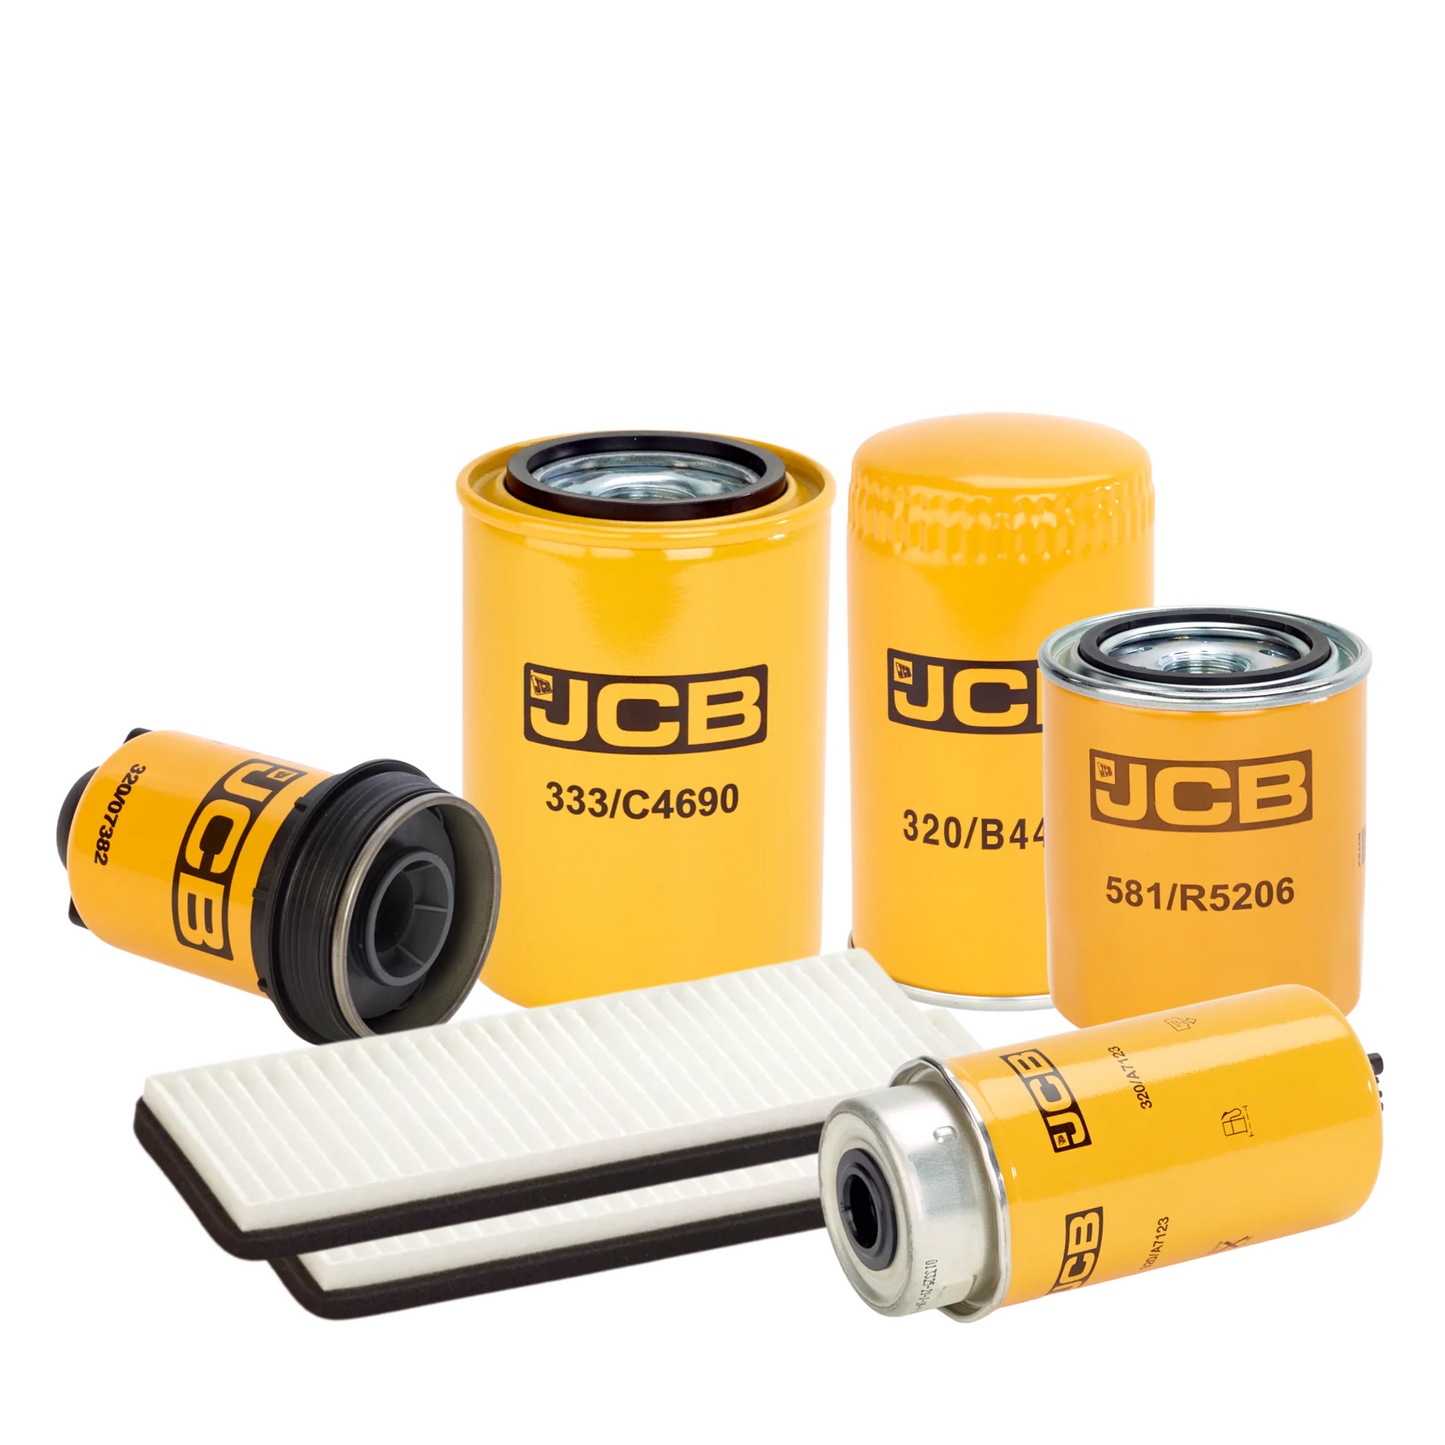 JCB 535-95 8500 Hour Filter Service Kit